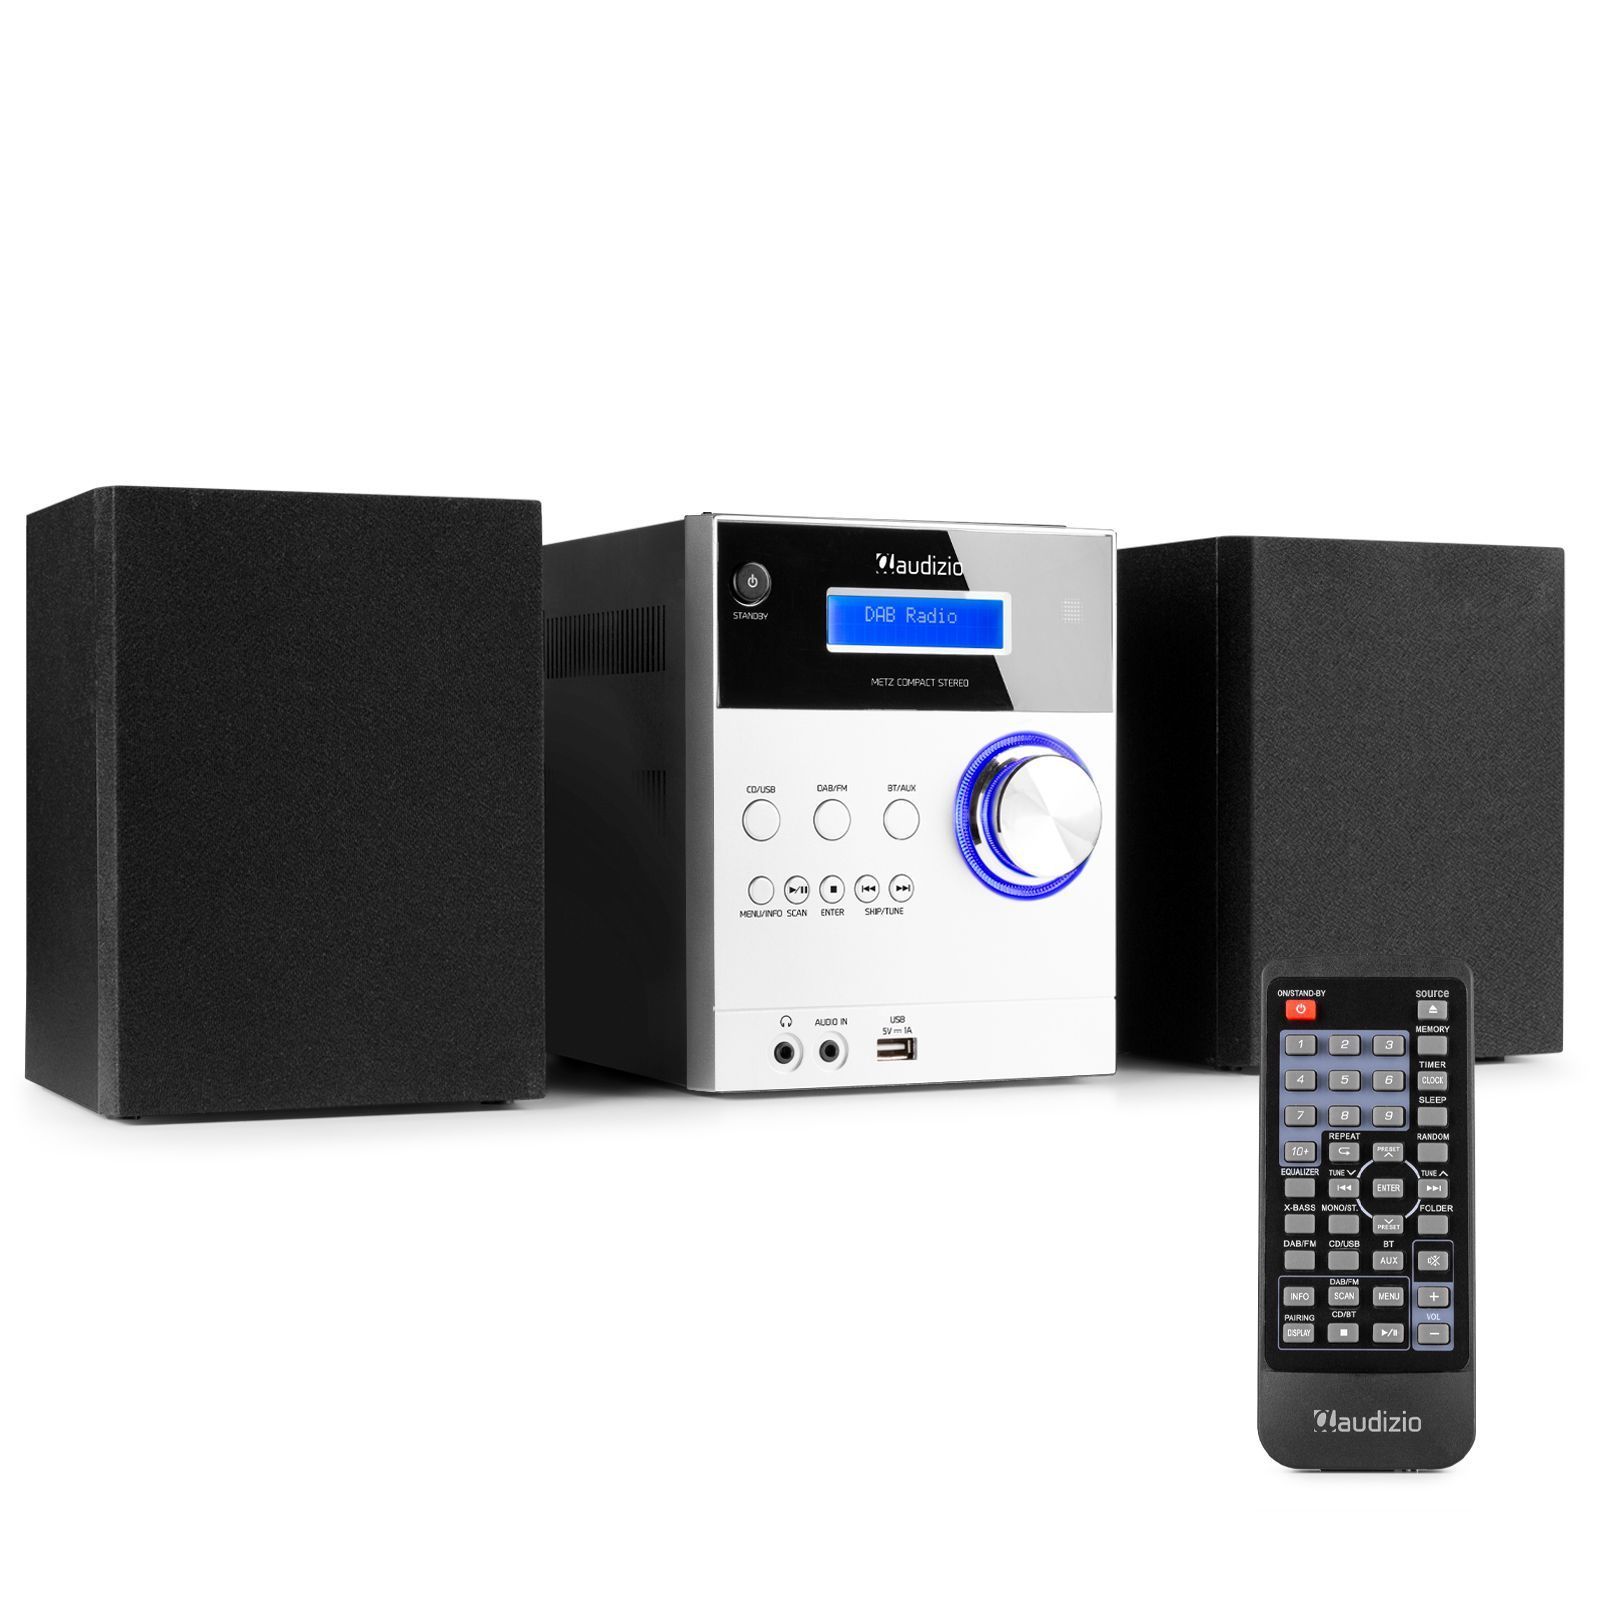 Retourdeal - Stereo set - Audizio Metz - DAB radio met Bluetooth, mp3